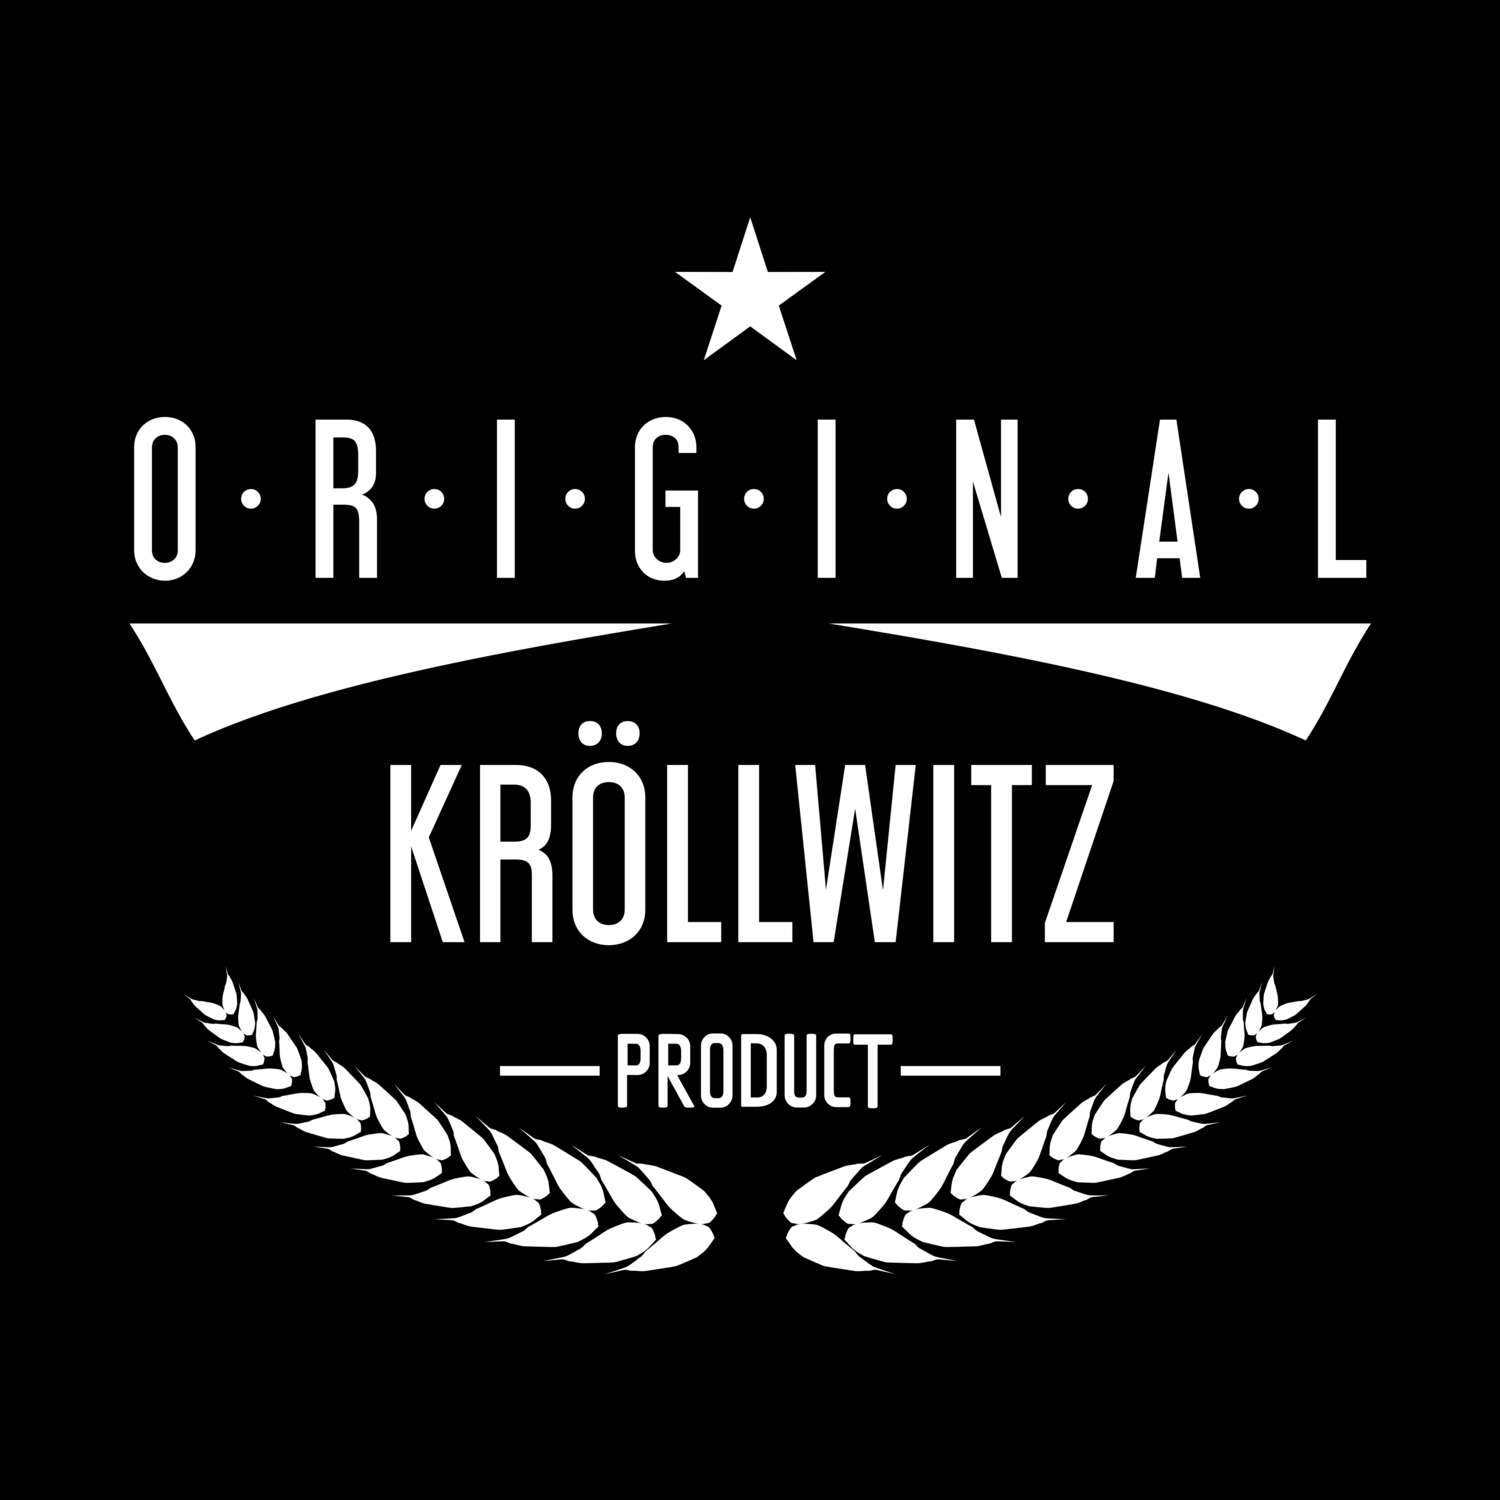 Kröllwitz T-Shirt »Original Product«